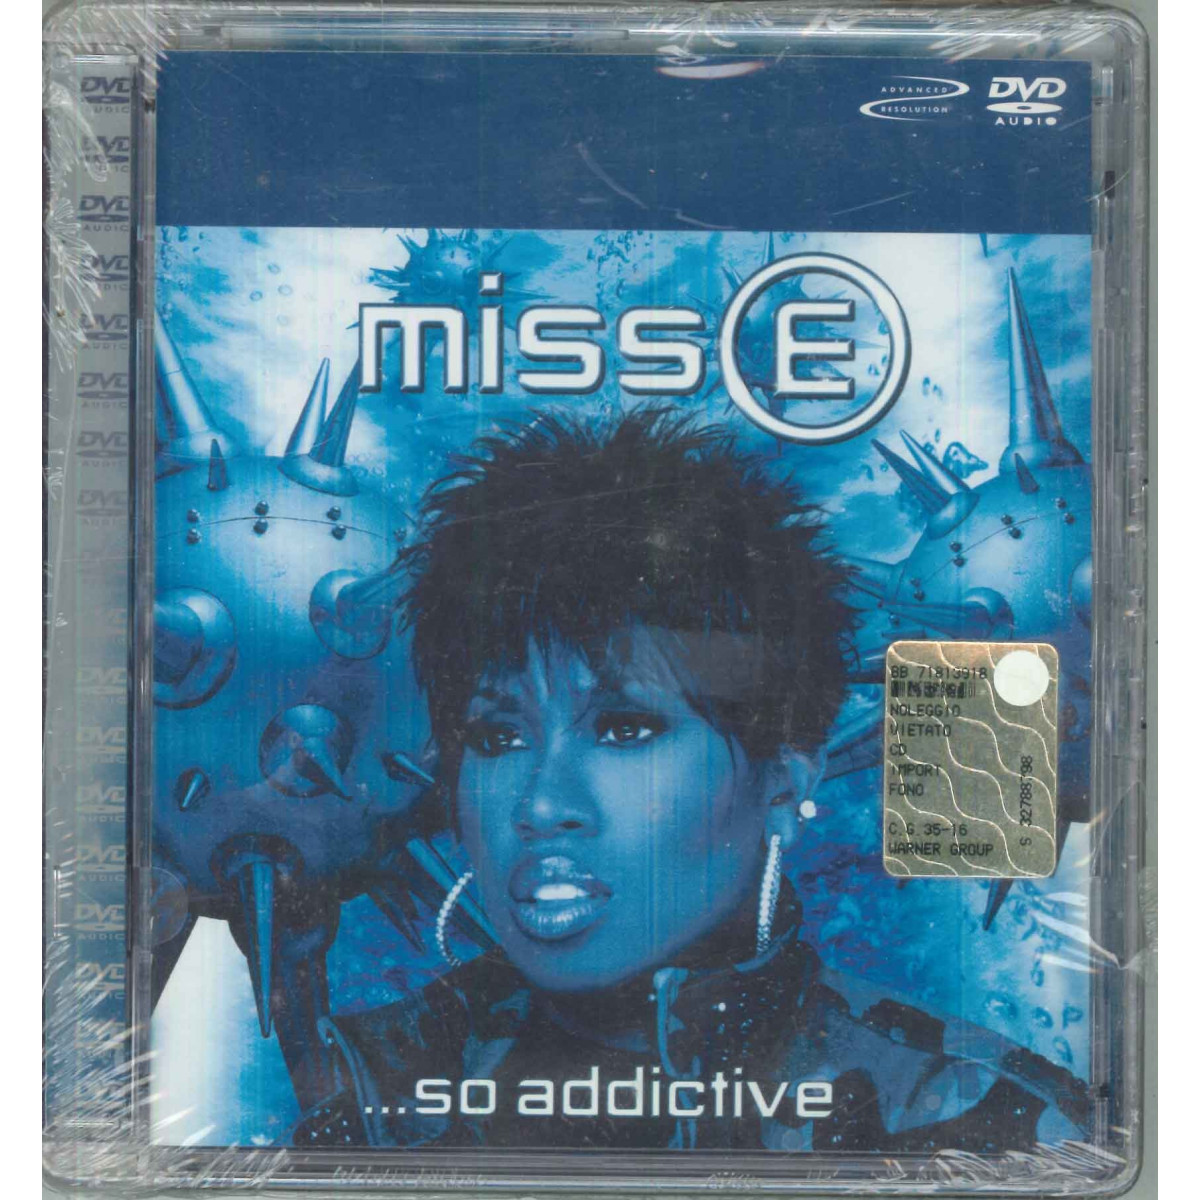 Missy Elliott ‎DVD Audio Miss E So Addictive / Elektra 7559-62643-9